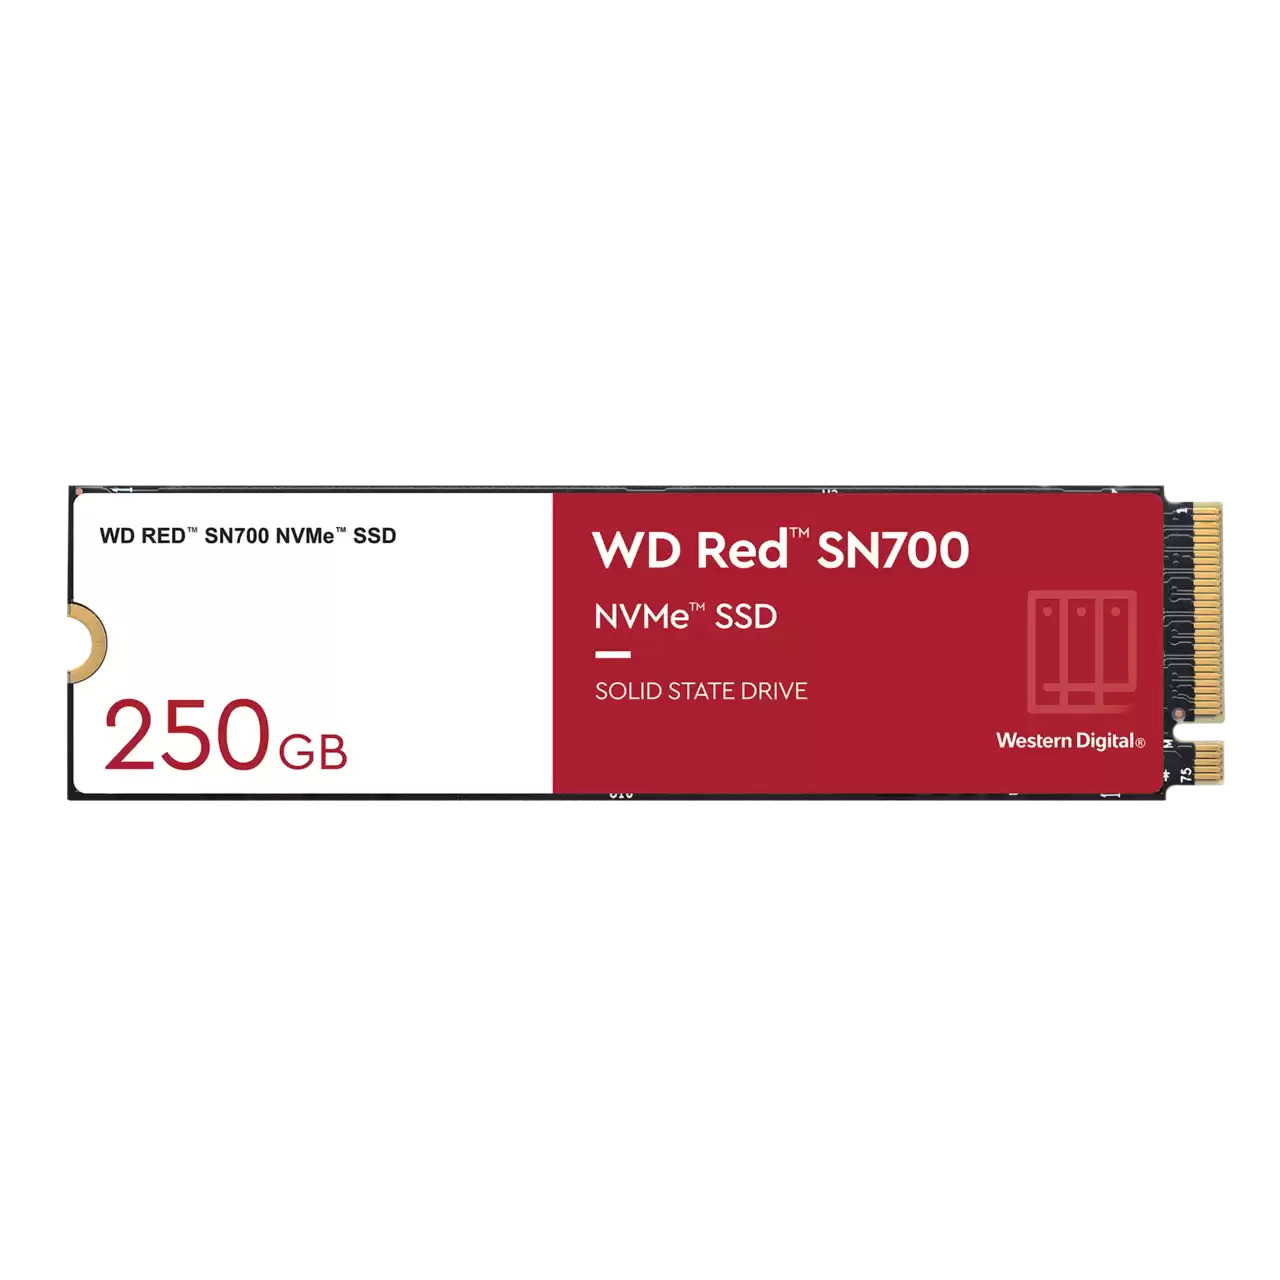 Hard disk ssd western digital wd red sn700 250gb m.2 2280